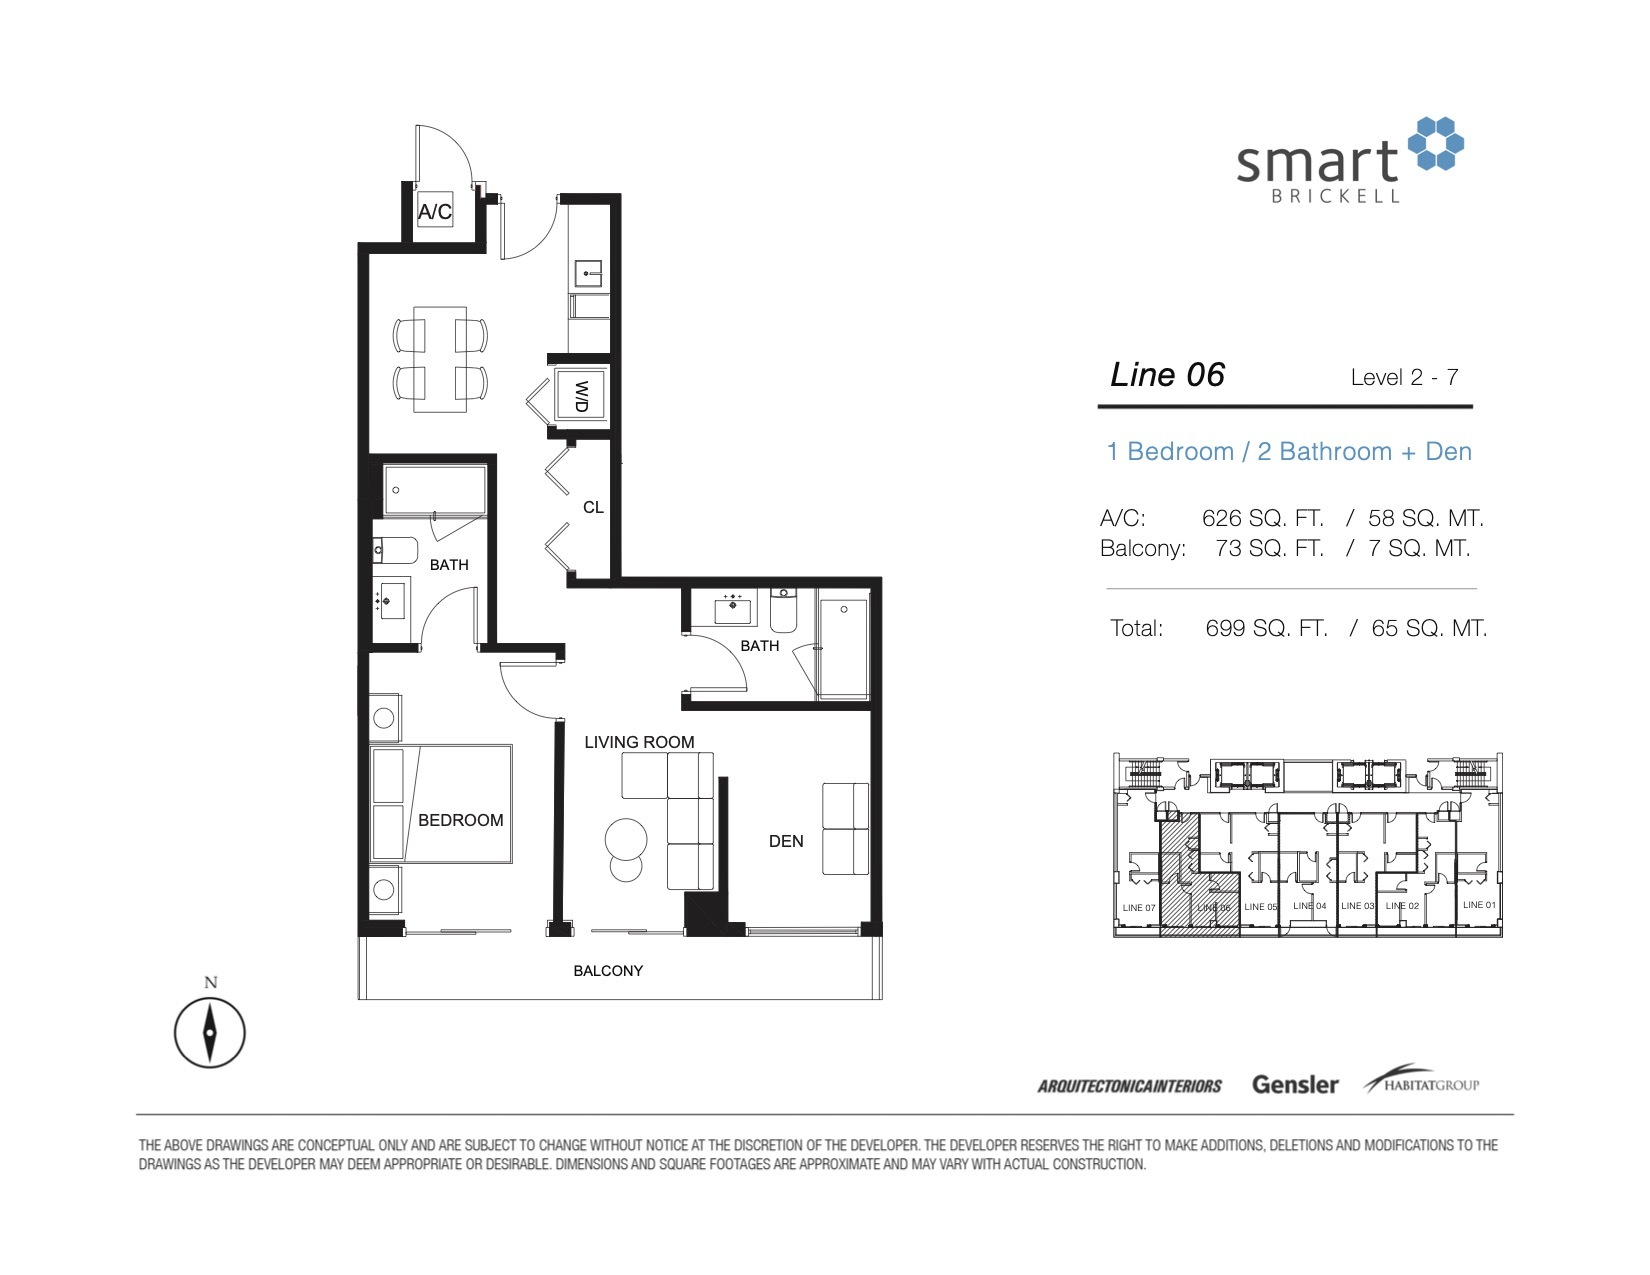 Floor Plan for Smart Brickell Floorplans, Line 06 Level 2-7